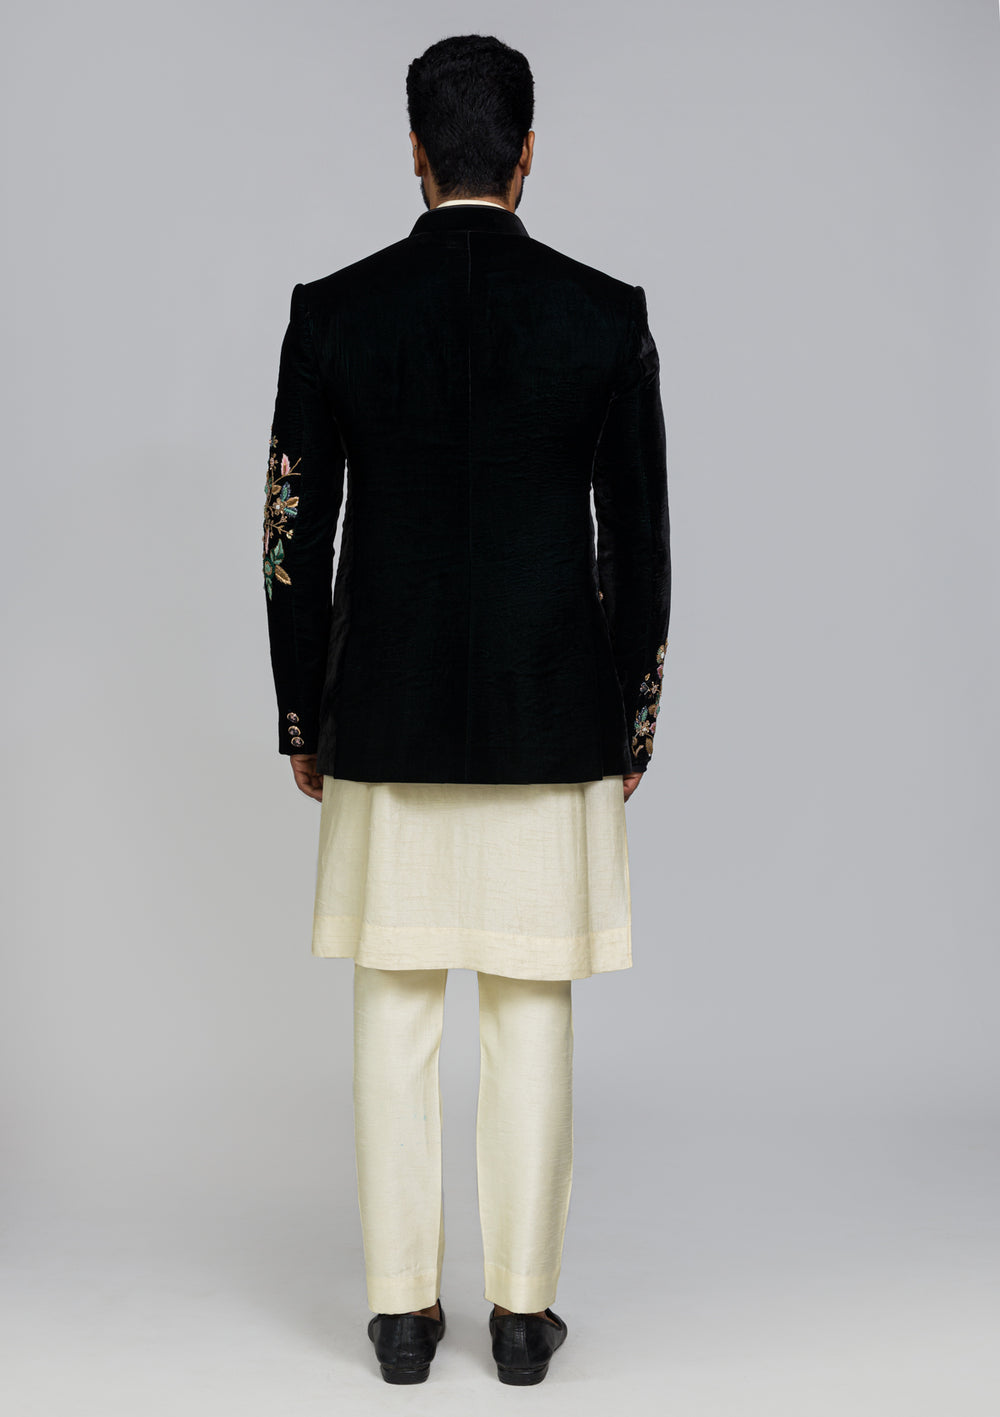 Black Velvet Designer Embroidered Royal Jodhpuri Suit Bandhgala